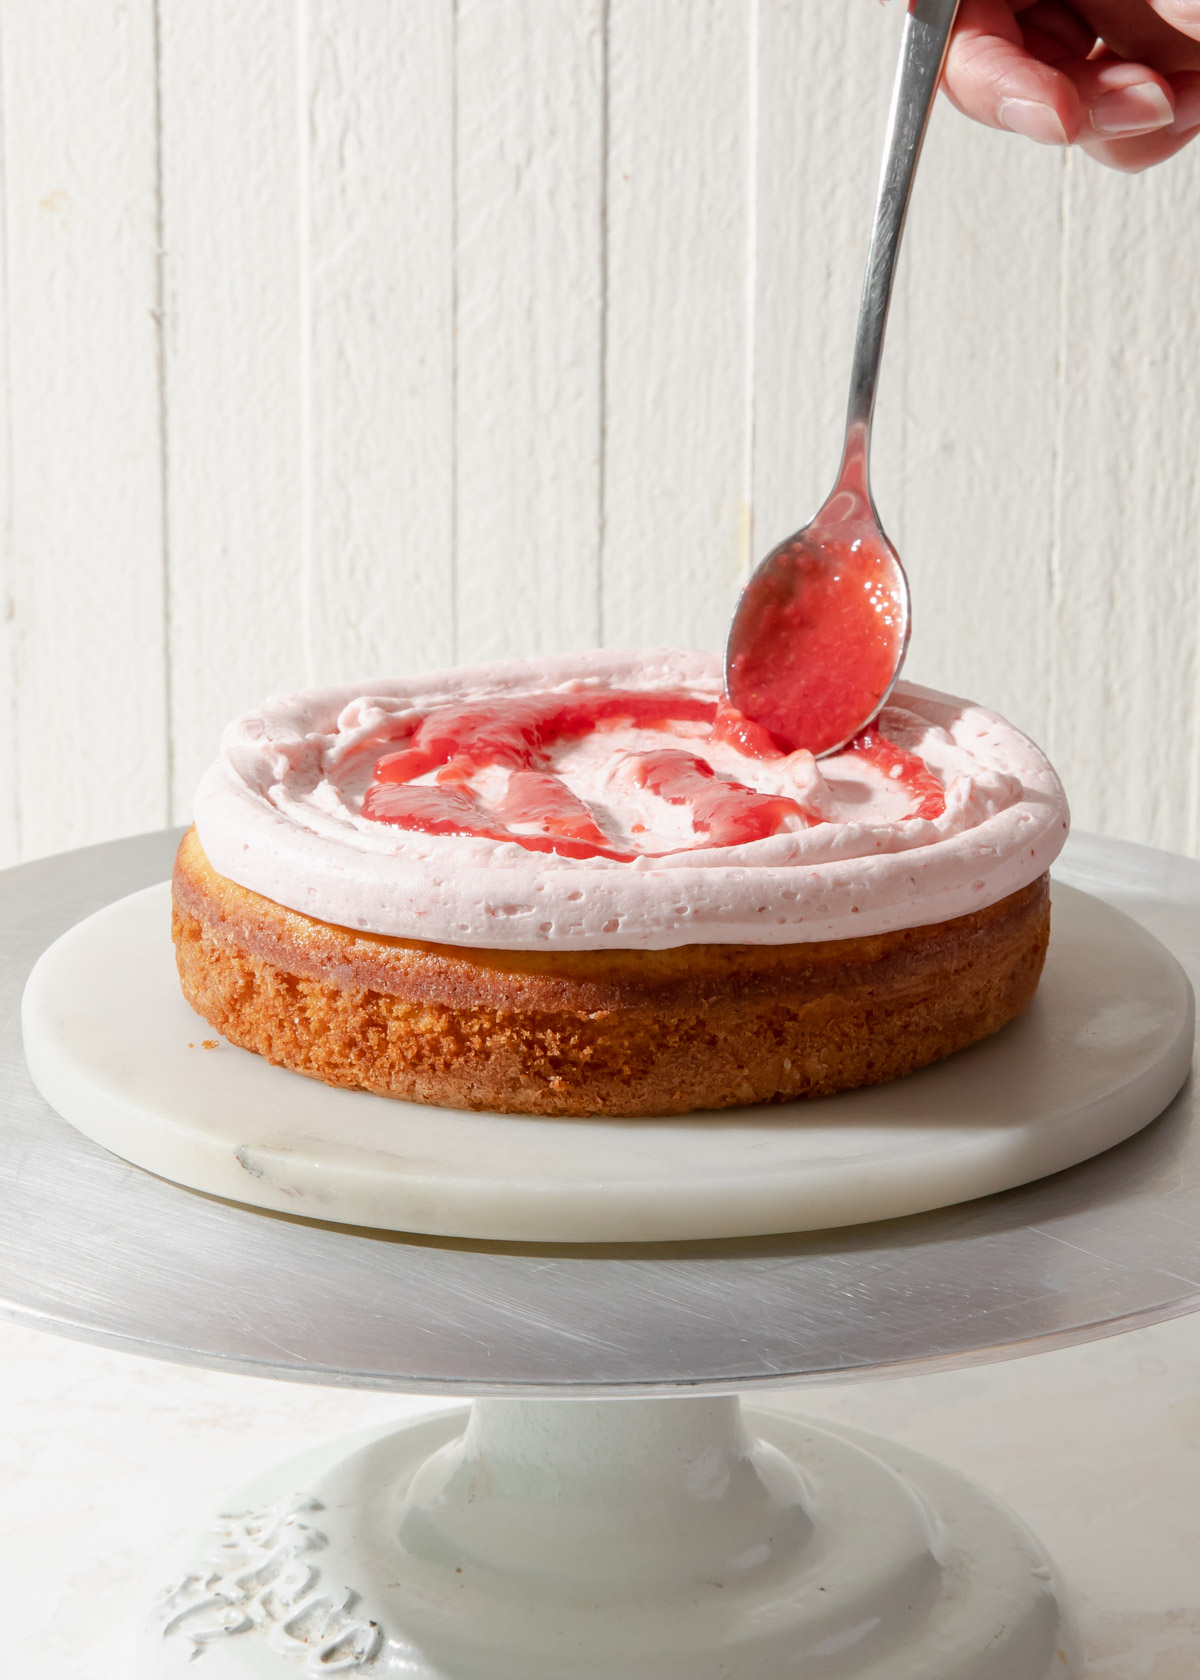 Spooning strawberry filling onto a vanilla cake